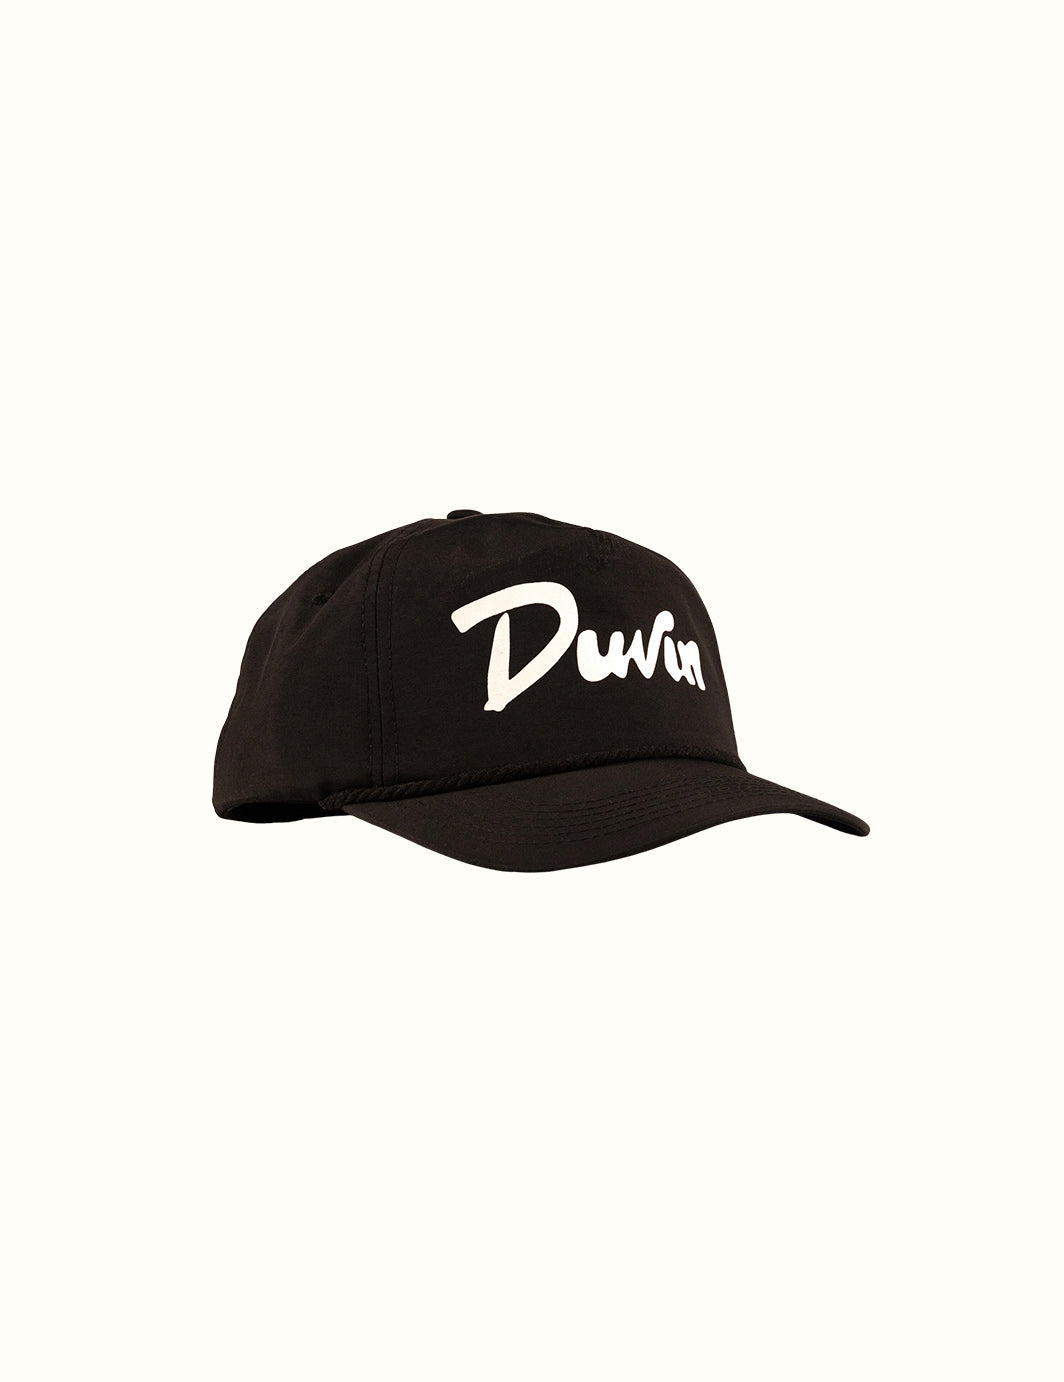 Duvin Script Hat - Black